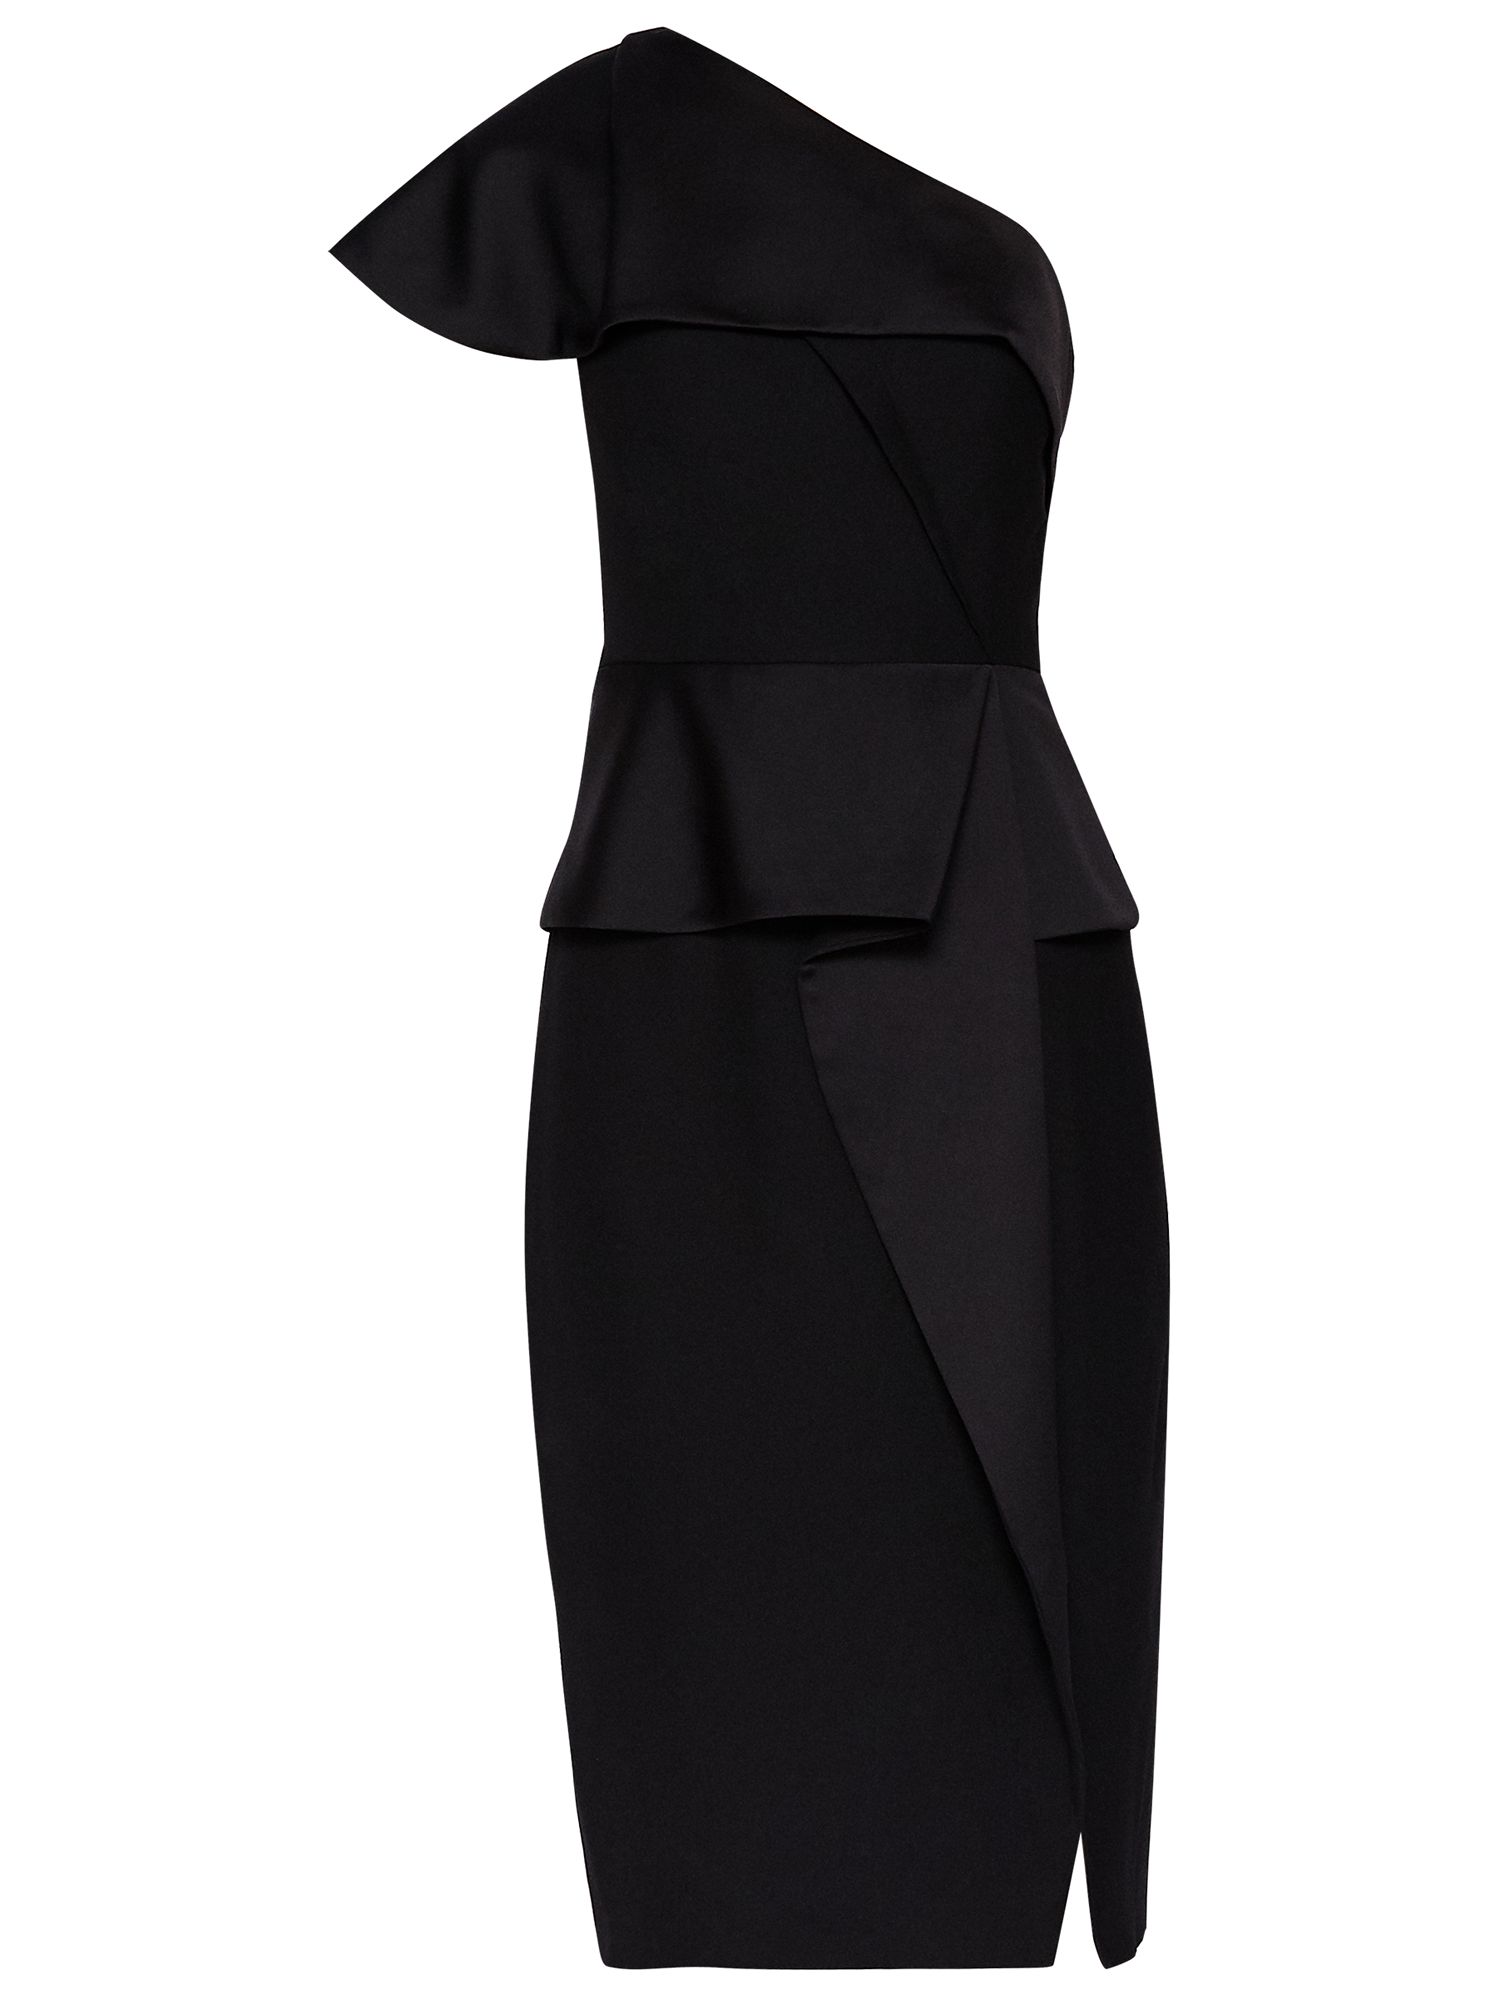 Ted Baker Pana Asymmetric Peplum Dress, Black